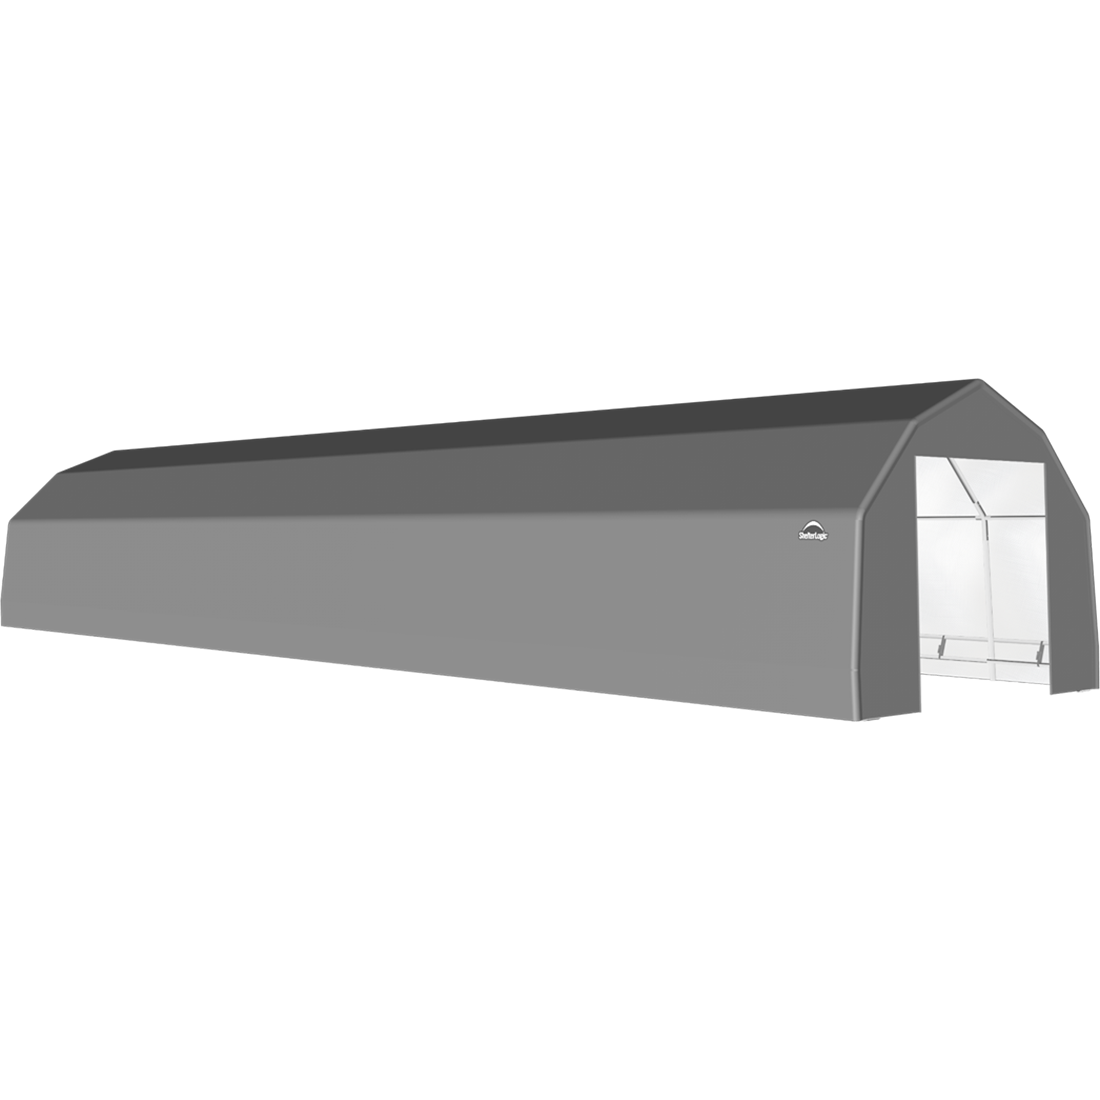 ShelterTech SP Series Barn Shelter, 15 ft. x 52 ft. x 11 ft. Heavy Duty PVC 14.5 oz. Gray